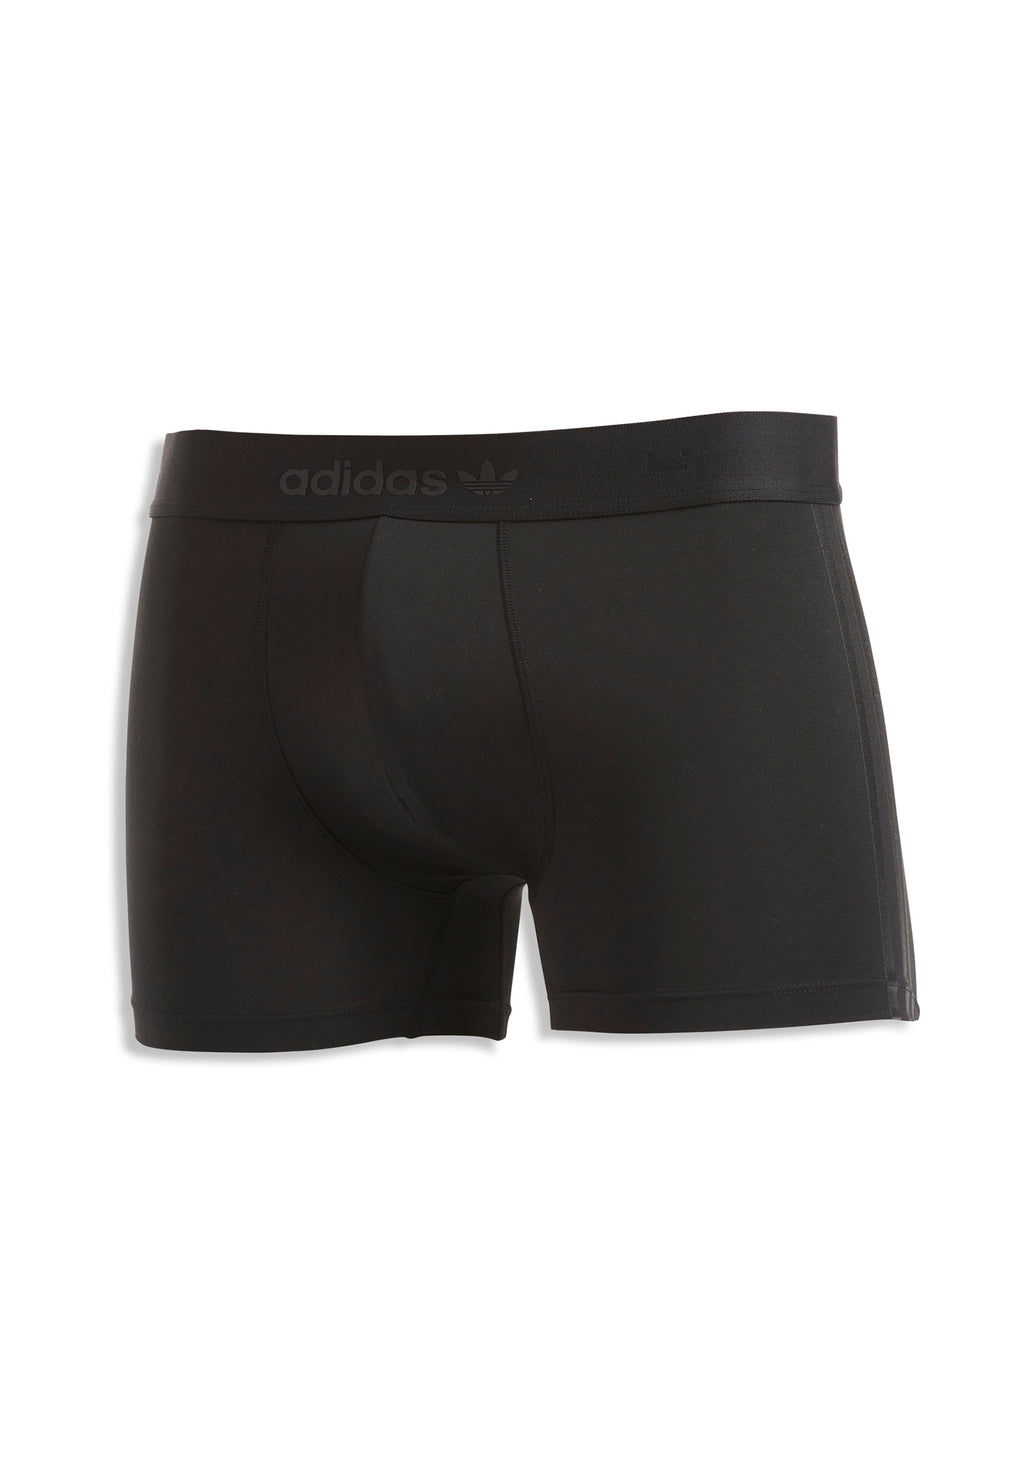 Shop Comfort Flex Eco Micro Trunk | adidas underwear – ADIDAS UNDERWEAR